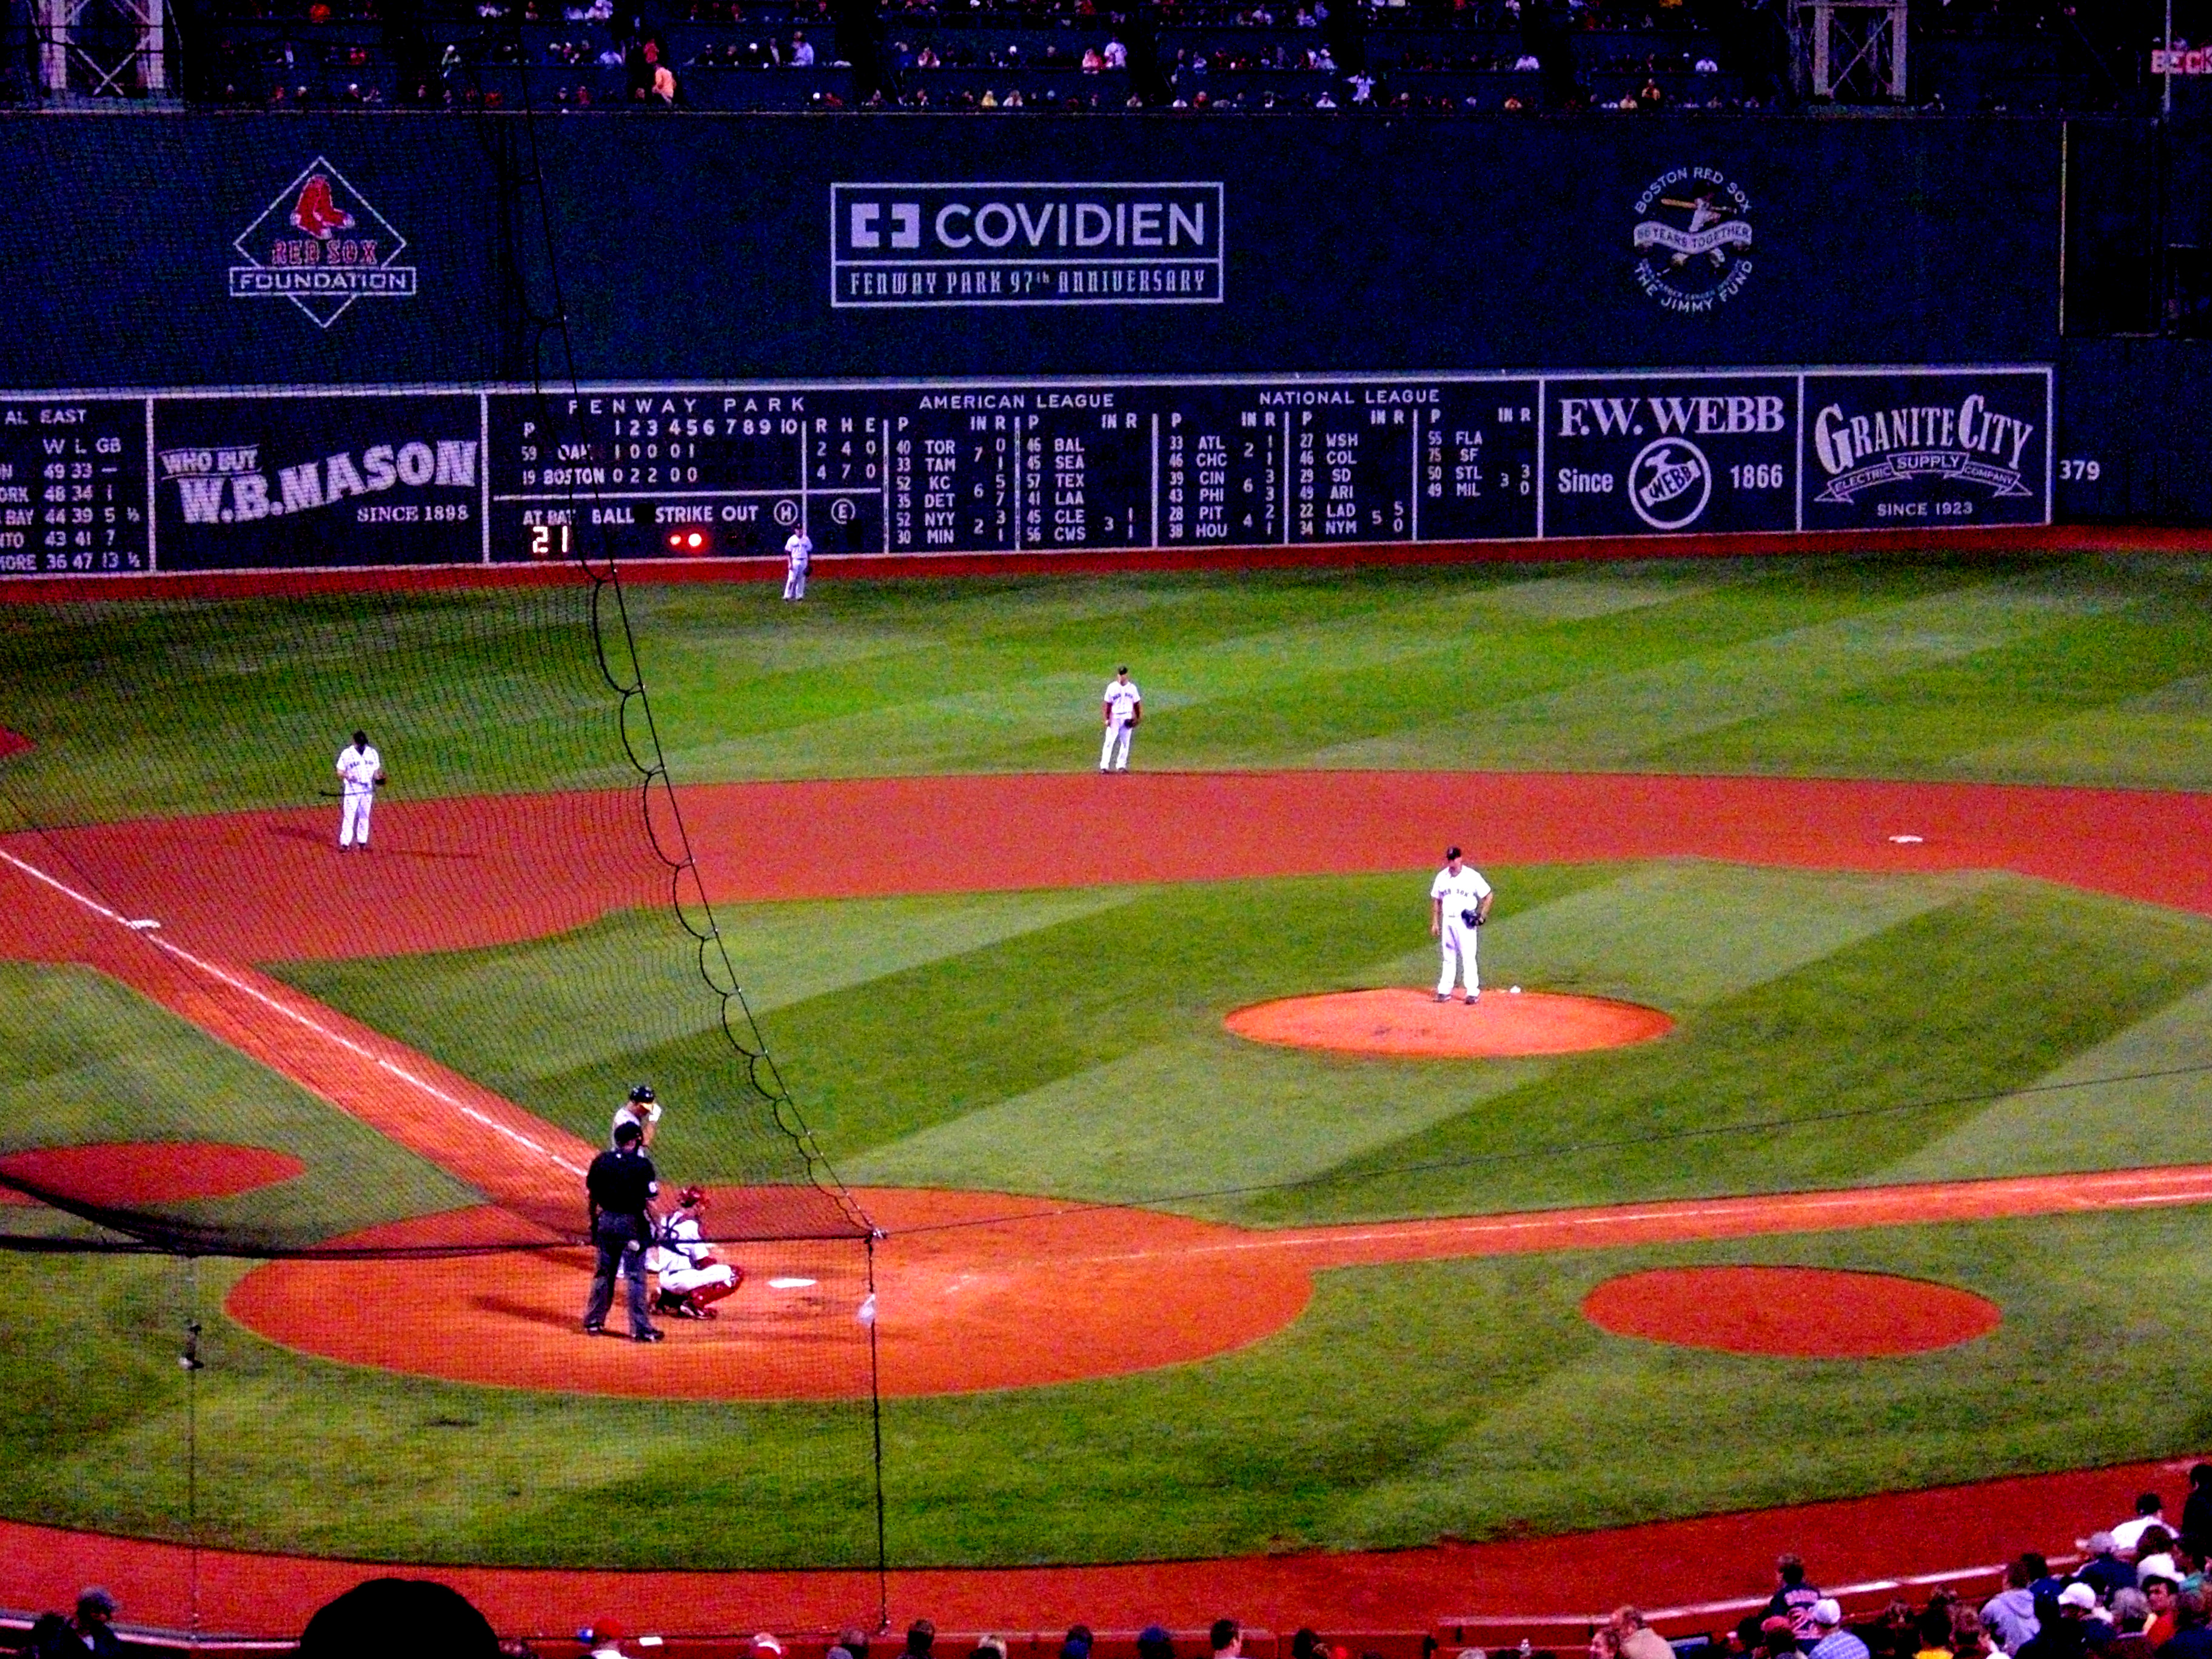 Photo Credit: stockvault.net, Fenway Baseball Game